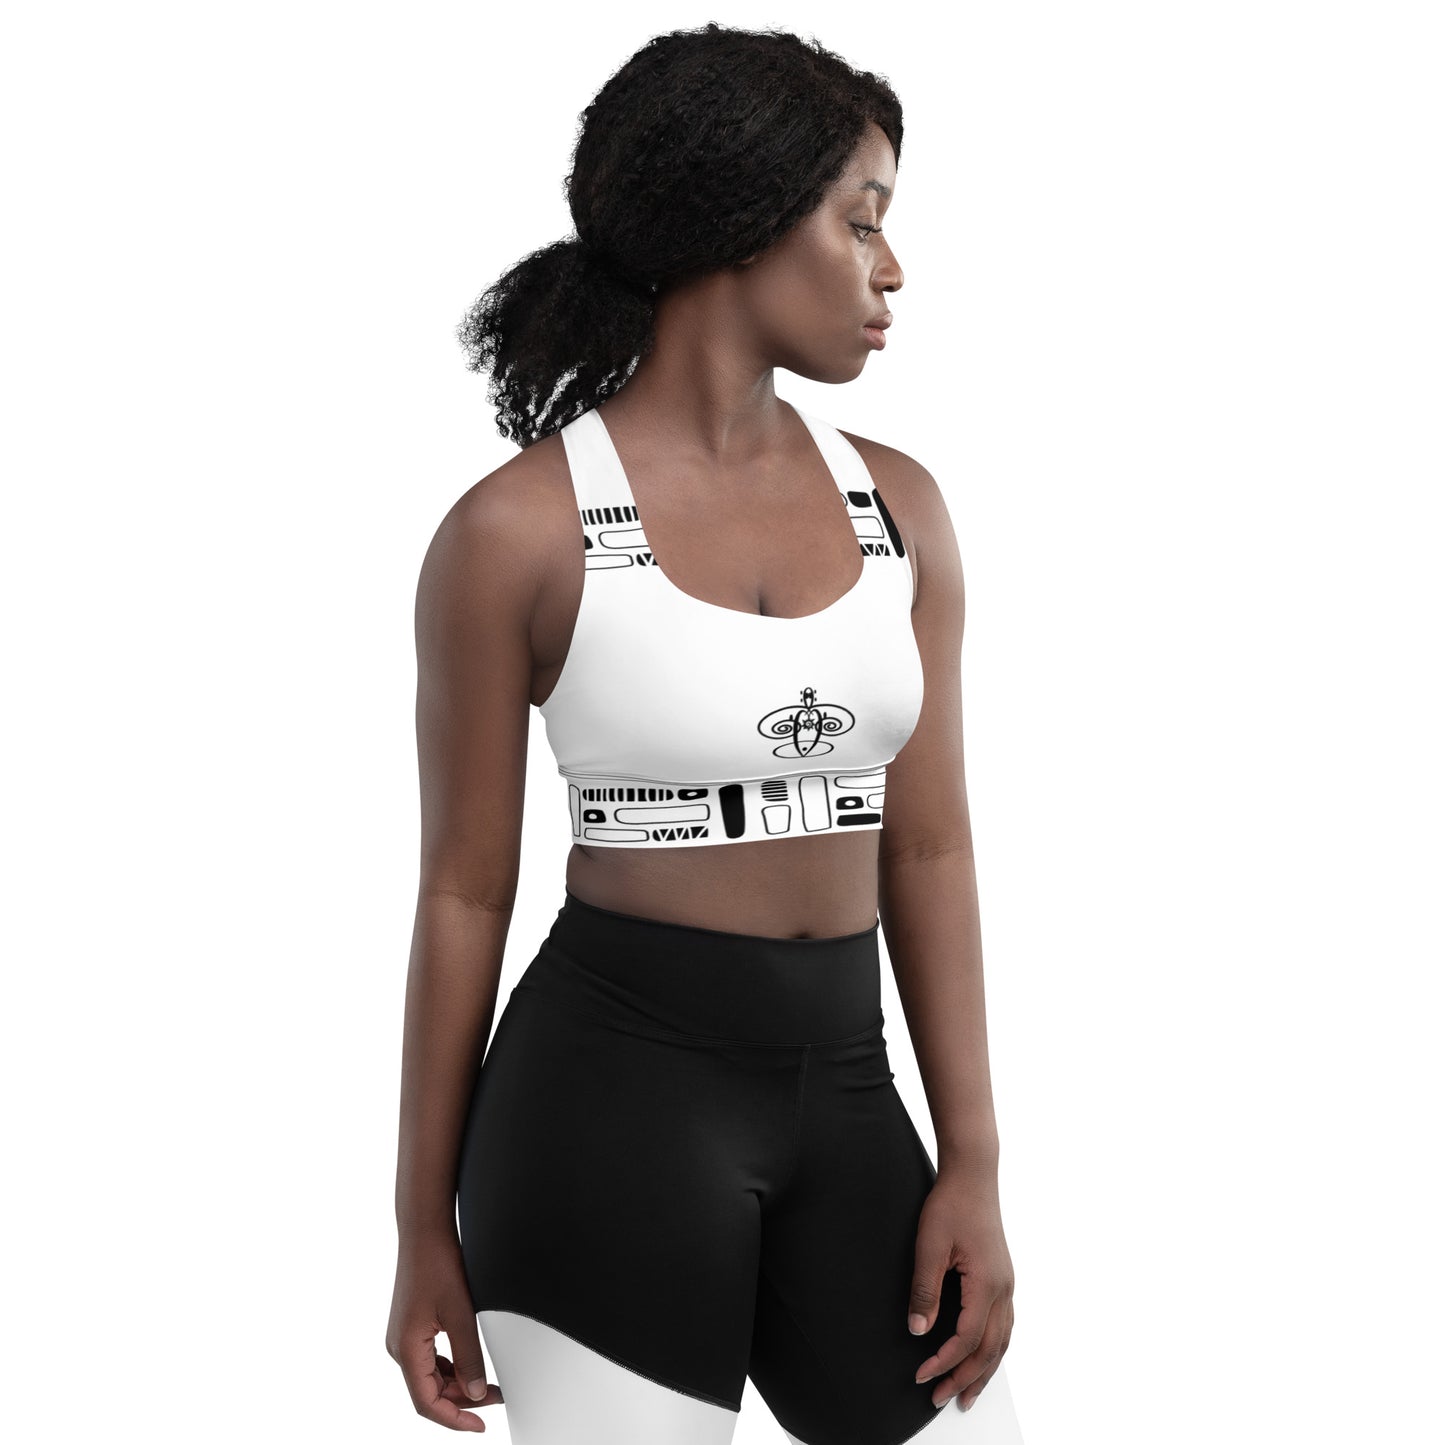 Longline sports bra 1 / Fitness Woman's bra.